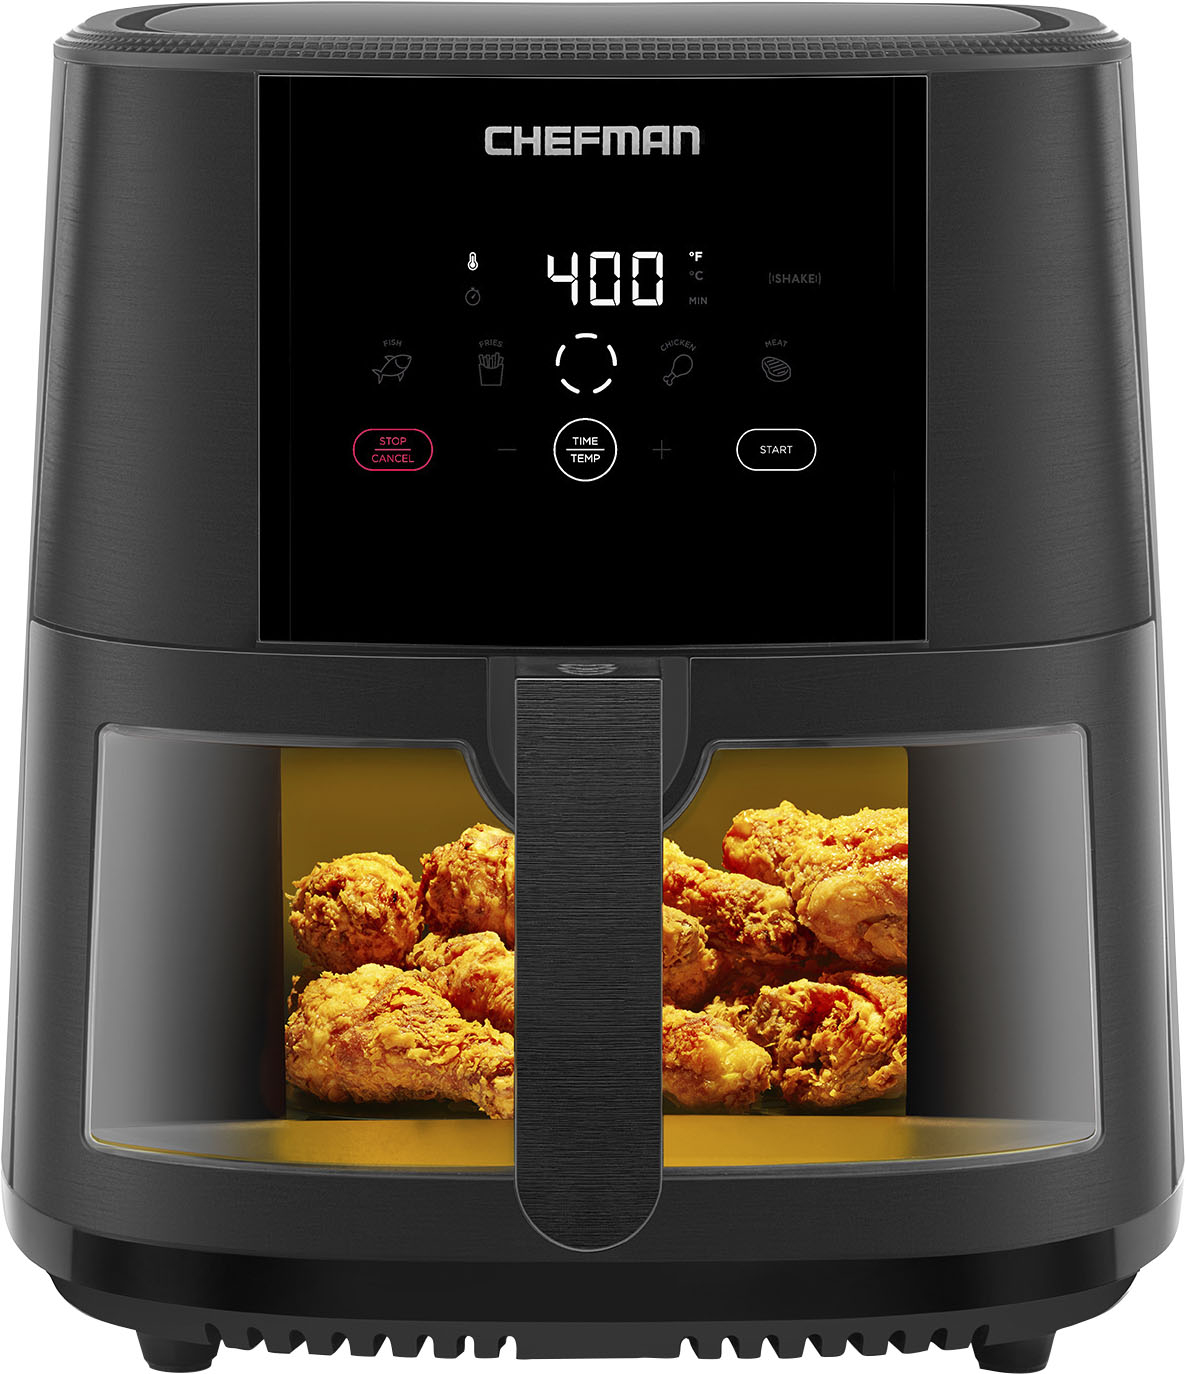 8-Quart Chefman TurboFry Touch Digital Air Fryer w/ Easy View Window $50